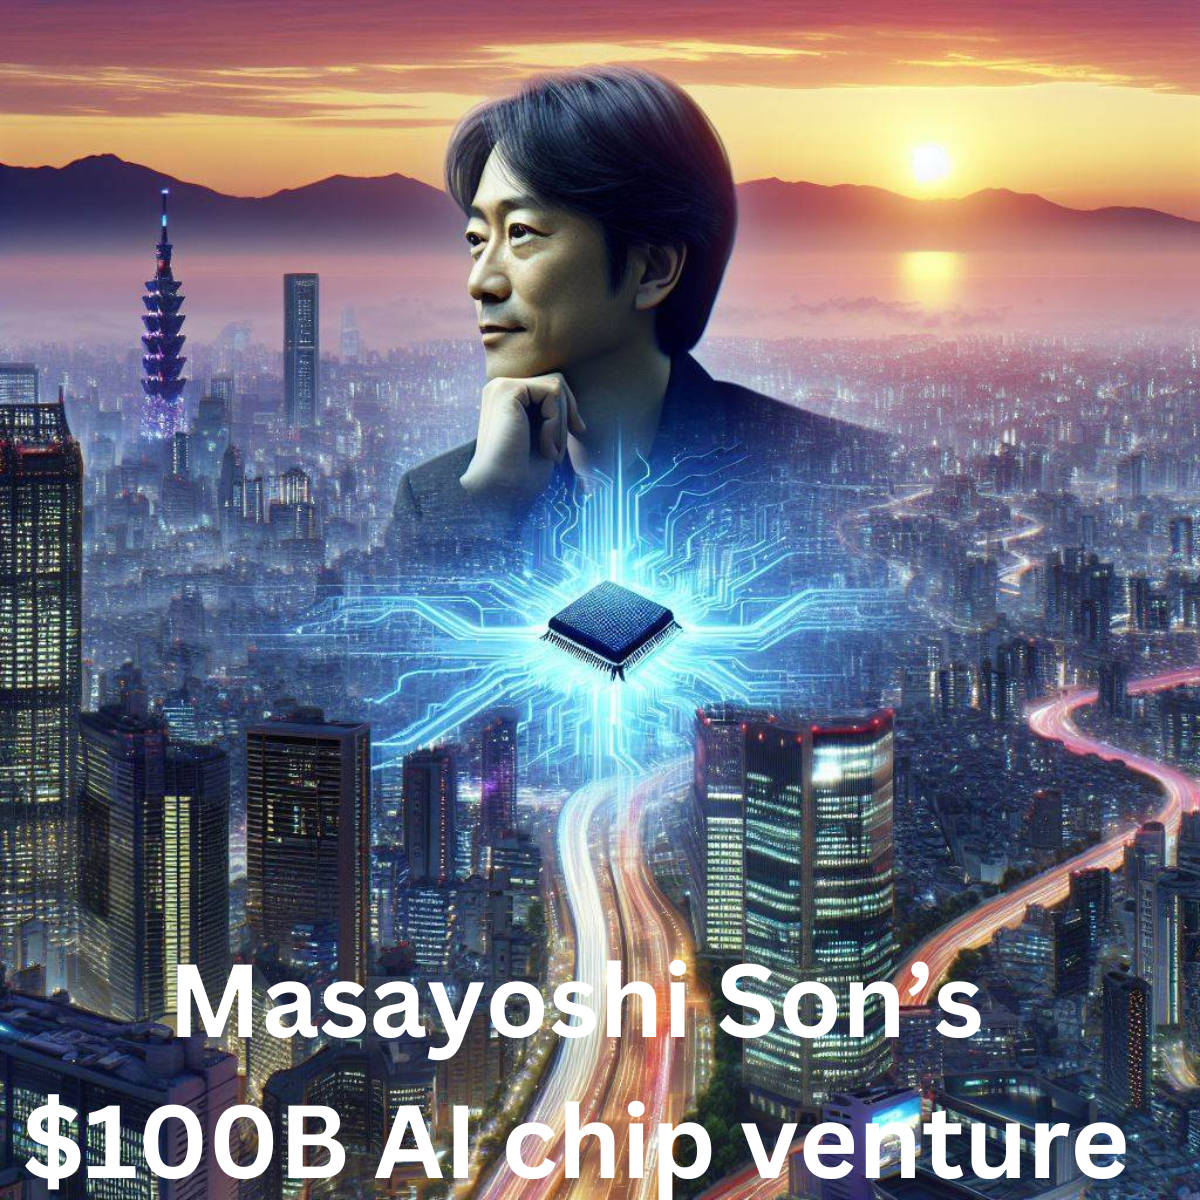 Masayoshi Son’s $100B AI chip venture